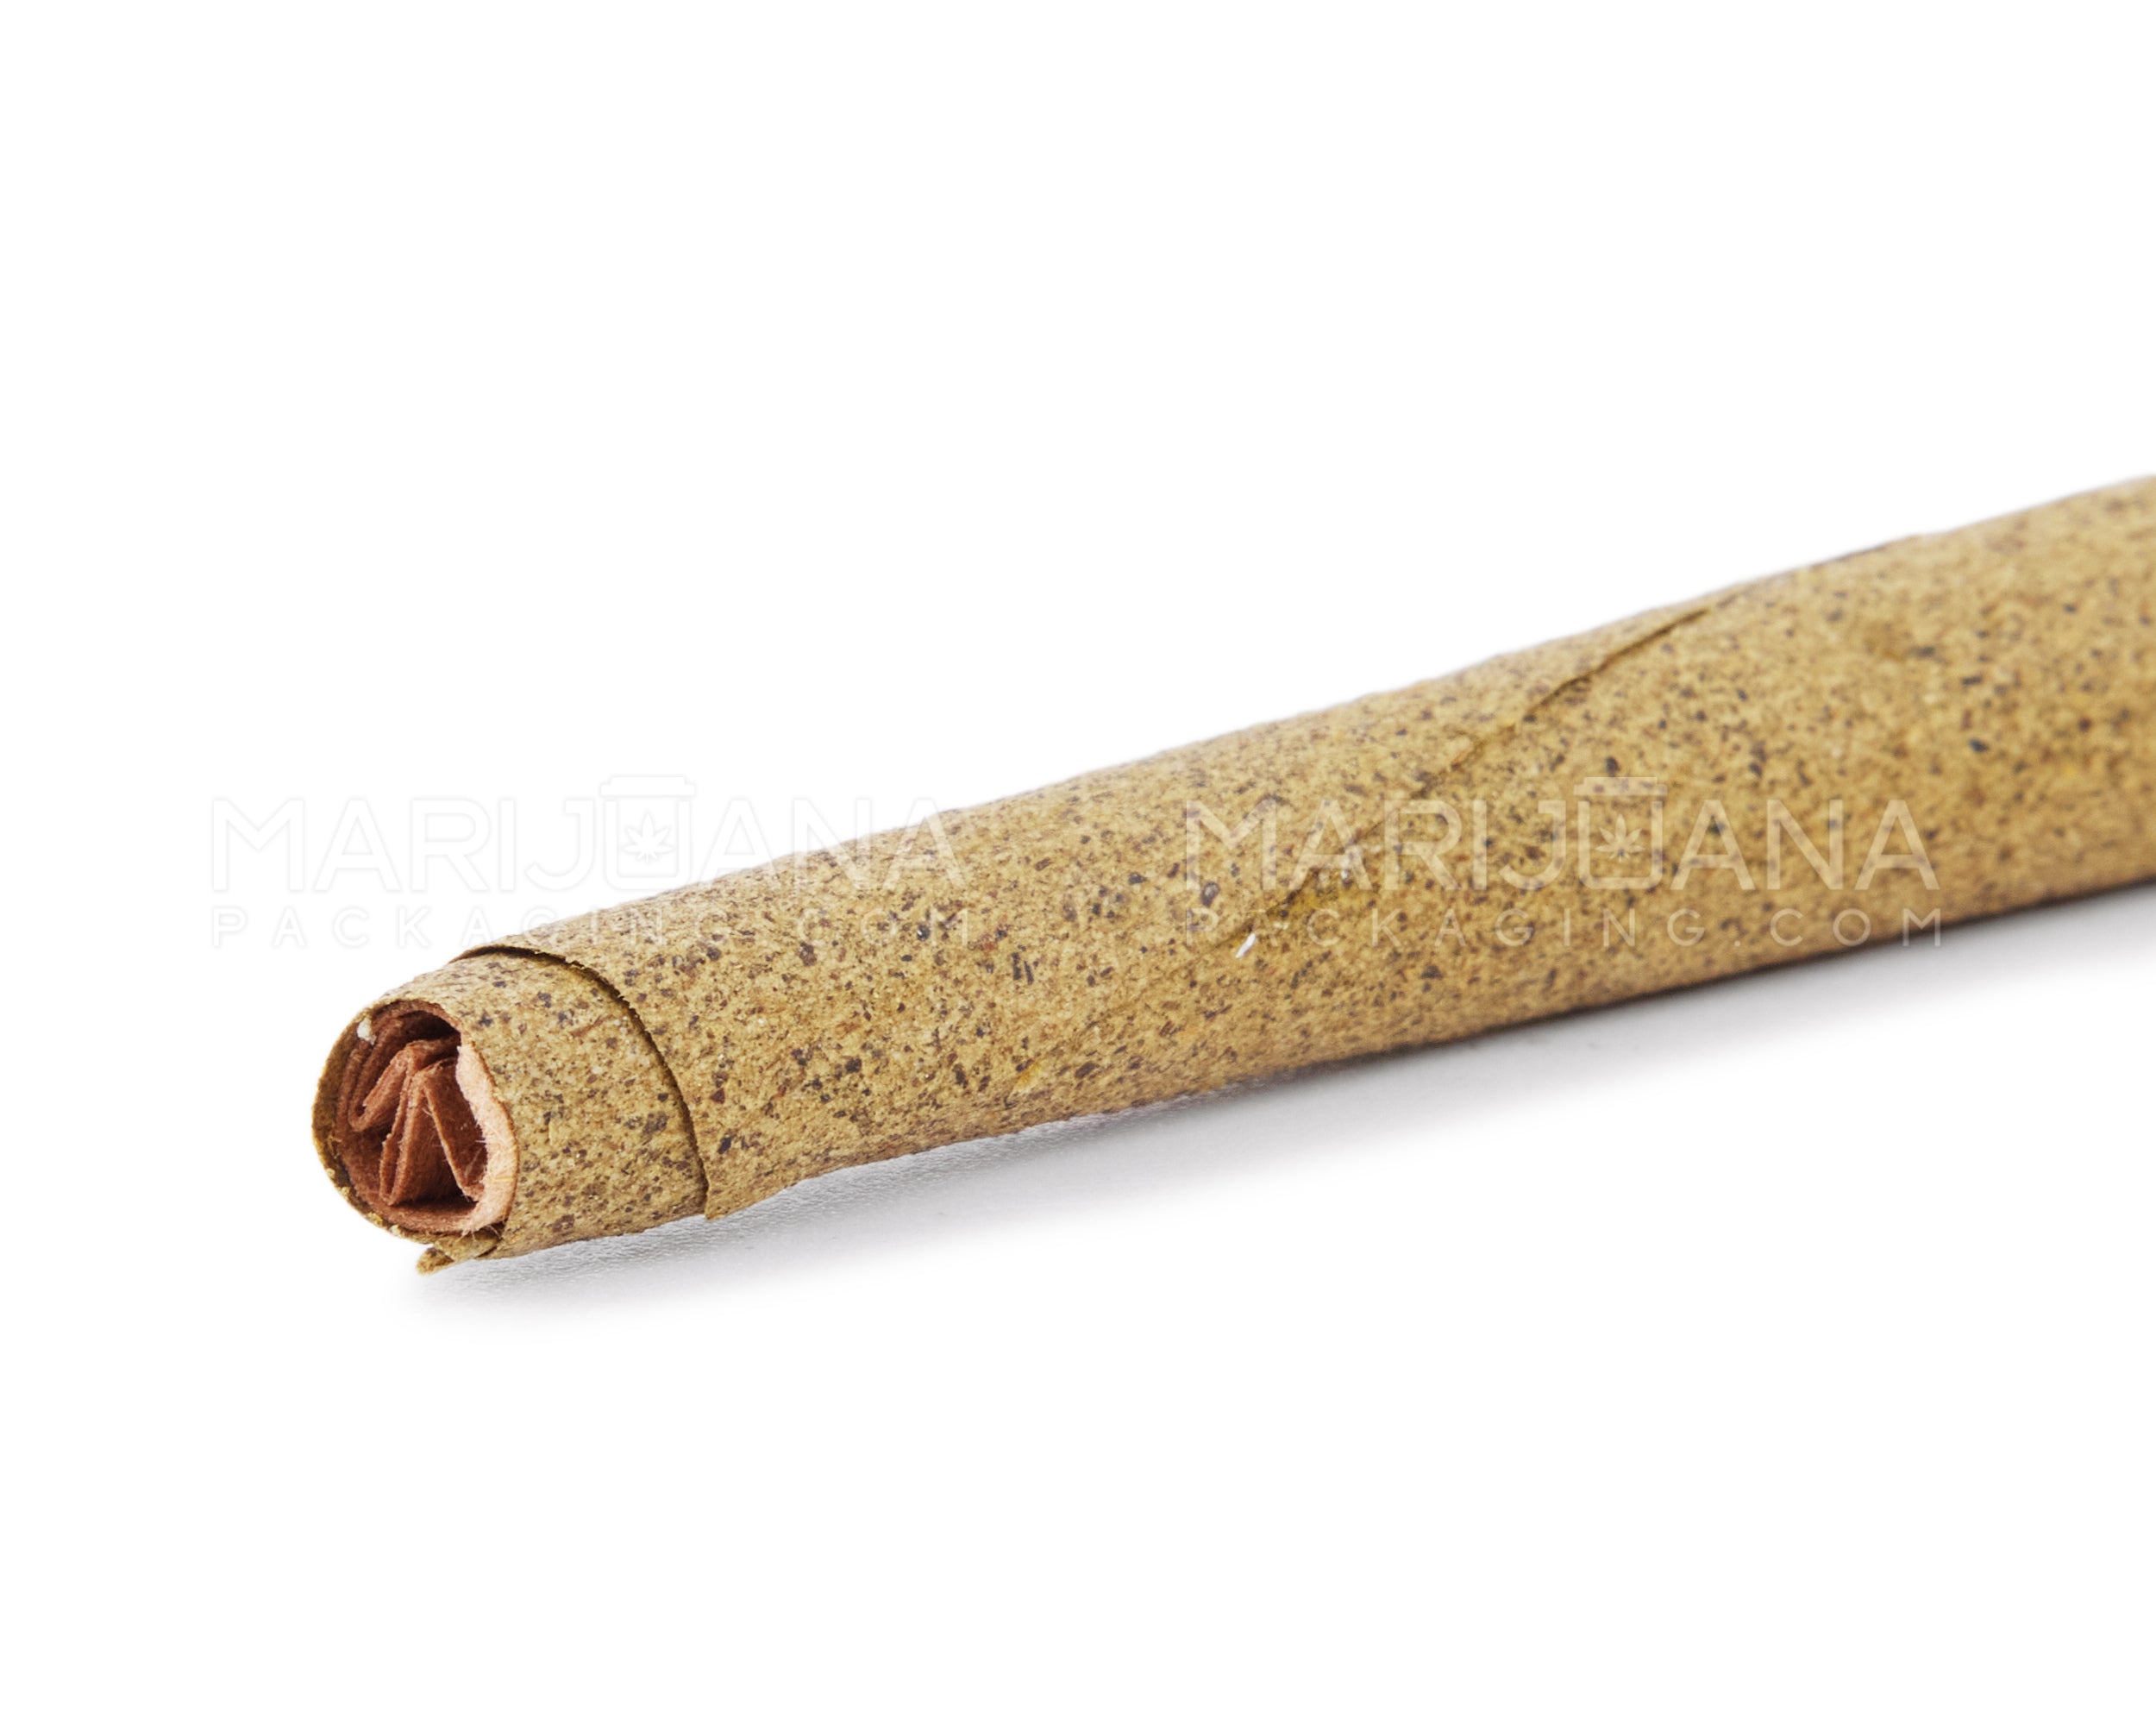 KUSH | 'Retail Display' Ultra Herbal Hemp Conical Wraps | 157mm - Sweet - 15 Count - 8